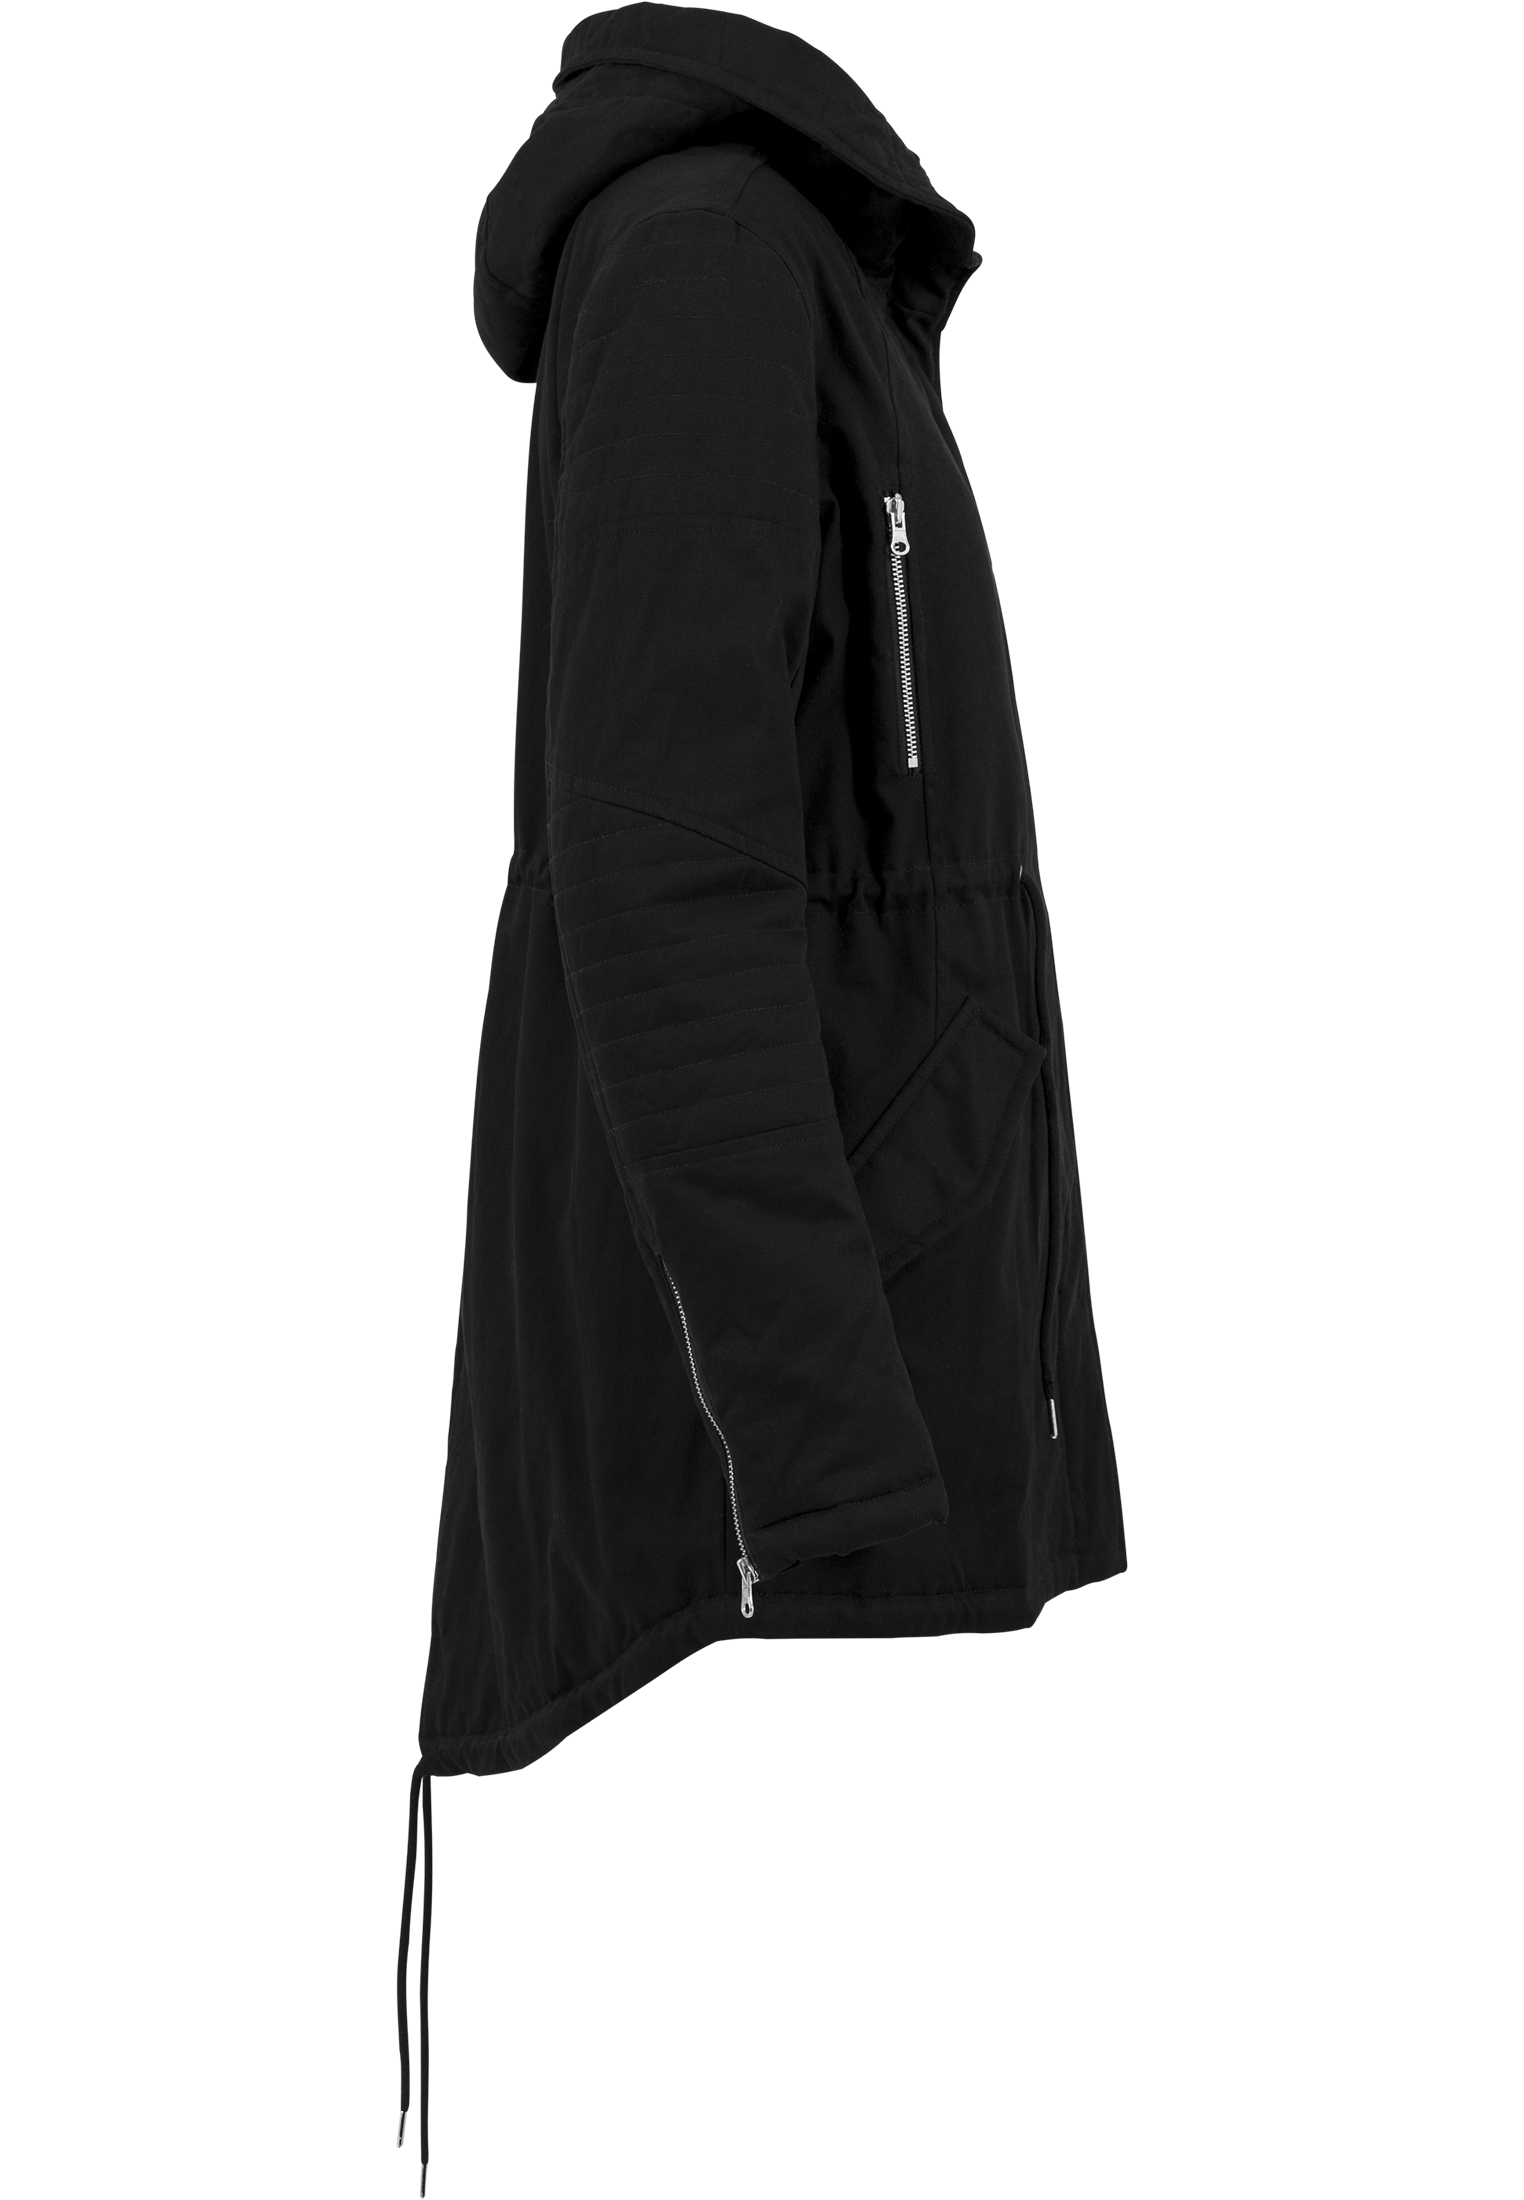 Winter Jacken Ladies Sherpa Lined Cotton Parka in Farbe black